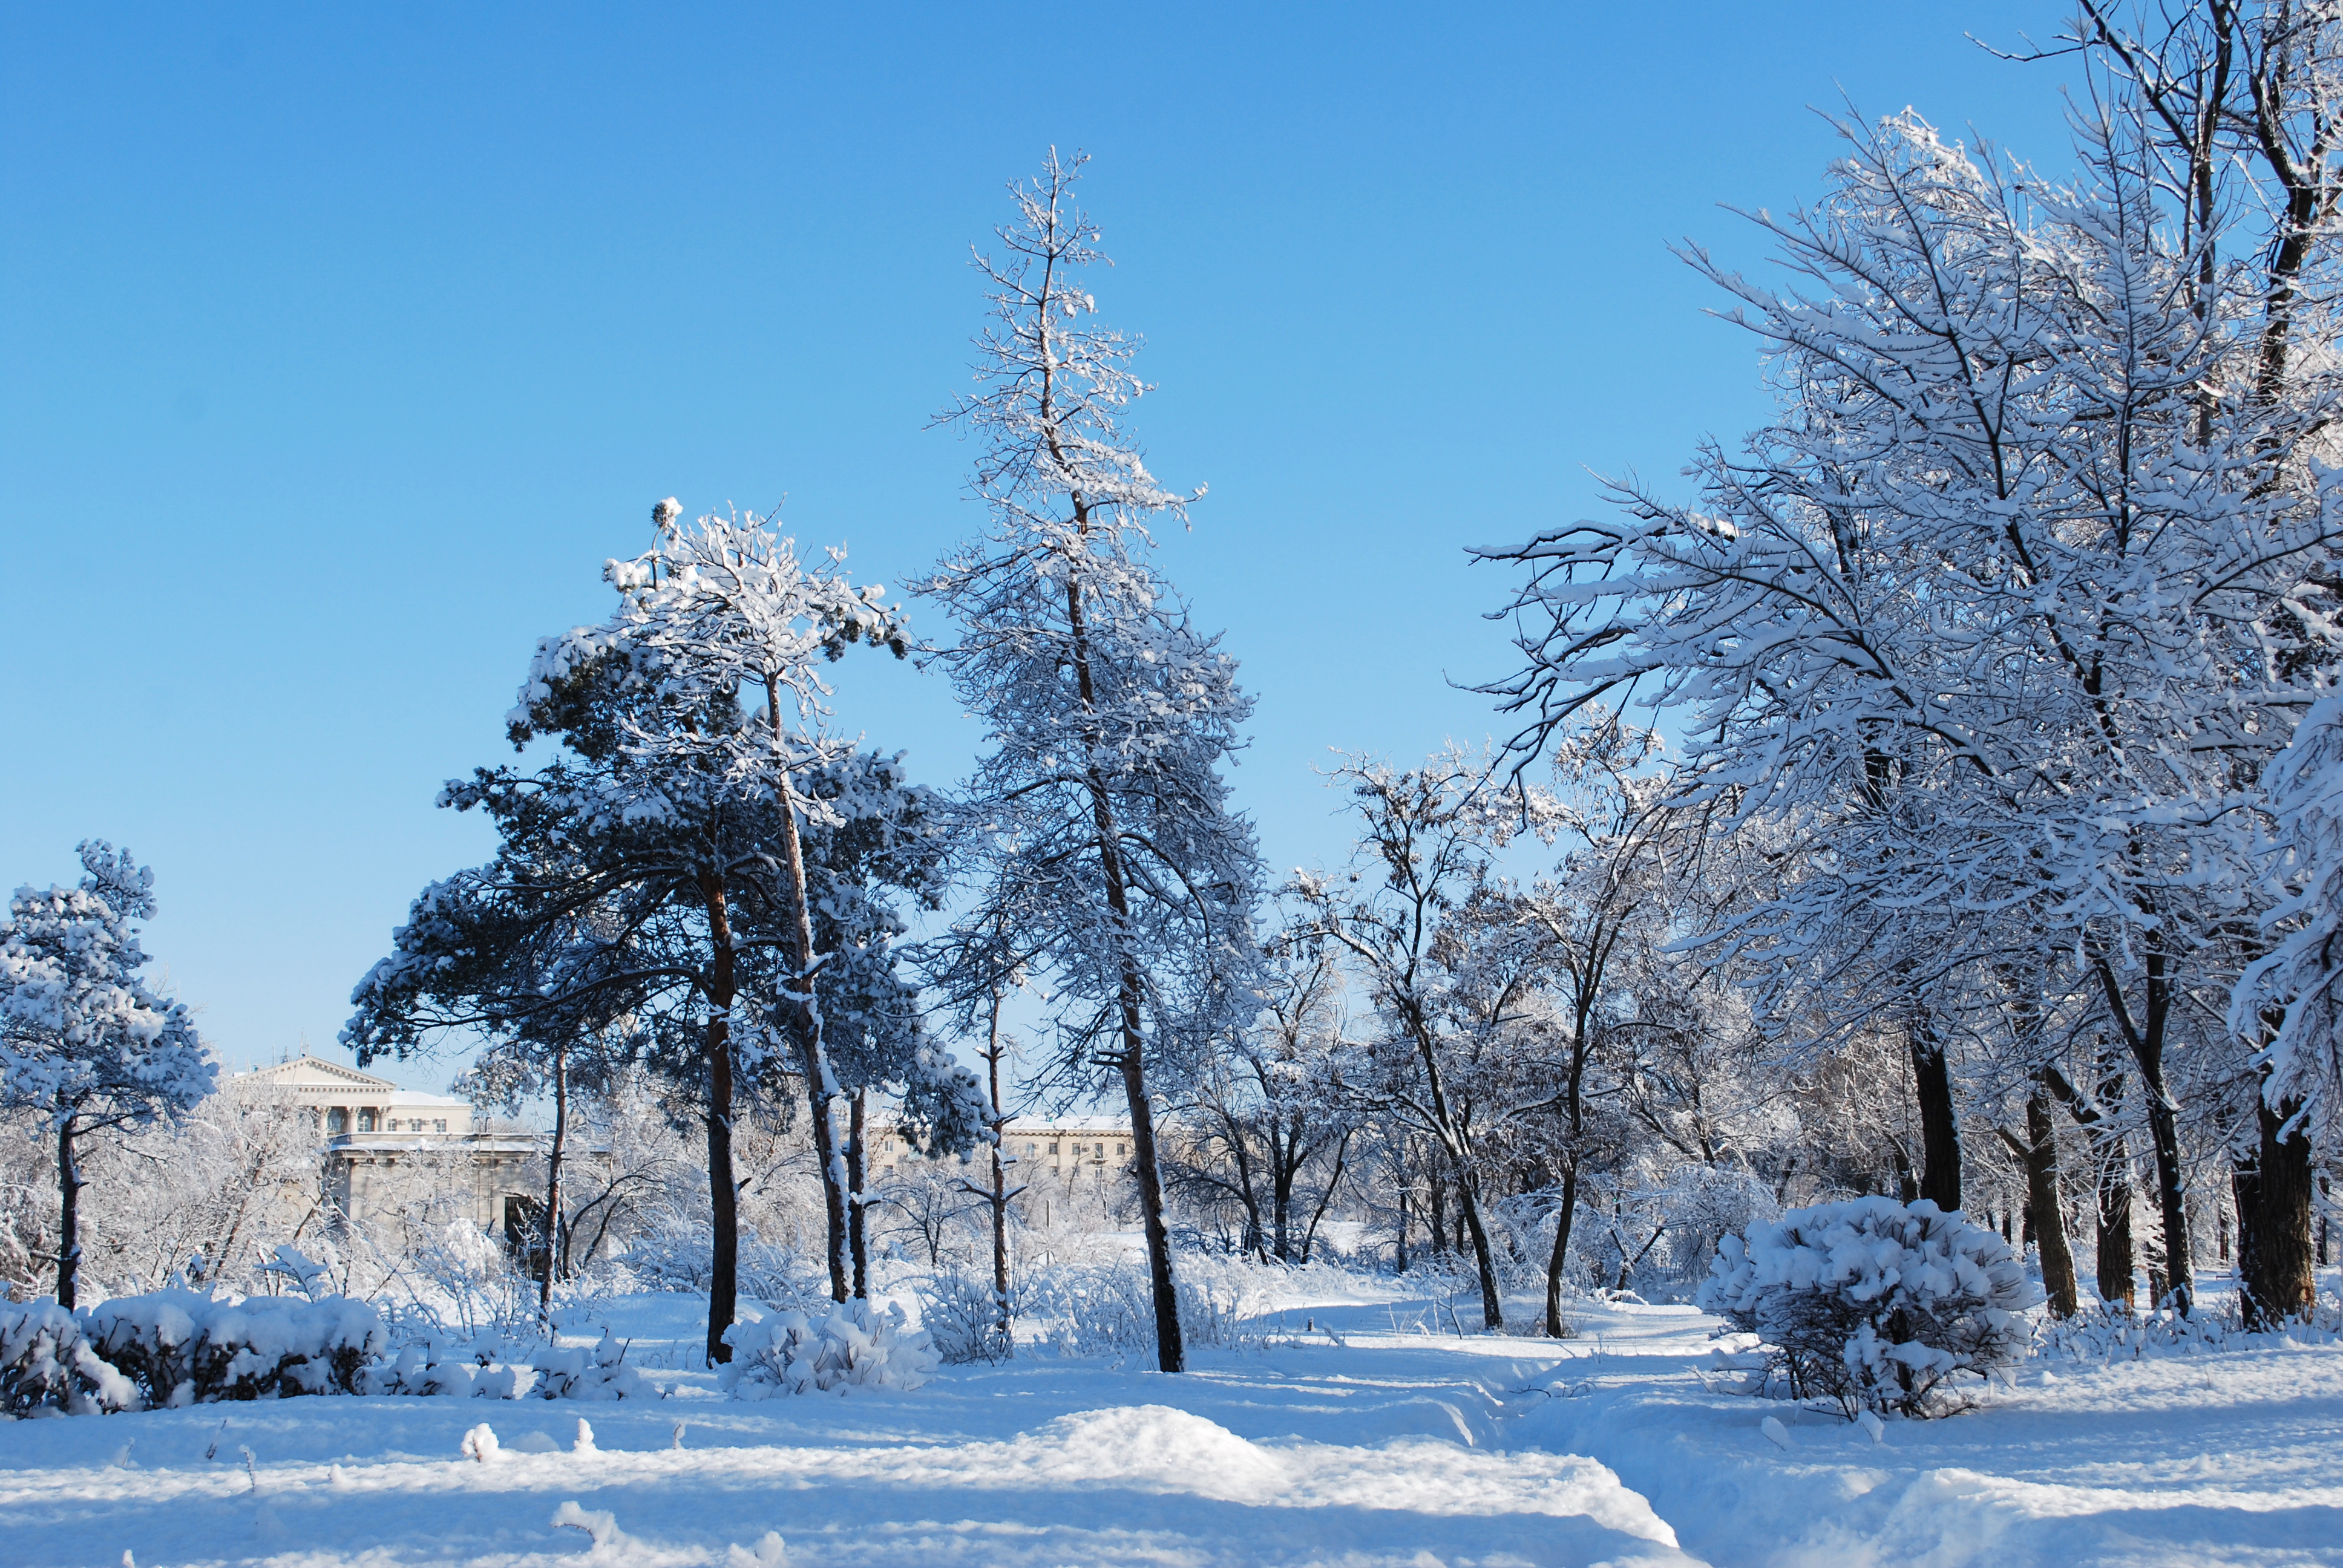 Вид зимы. Деревья в снегу. Зимний пейзаж. Зимняя природа. Зима фото.